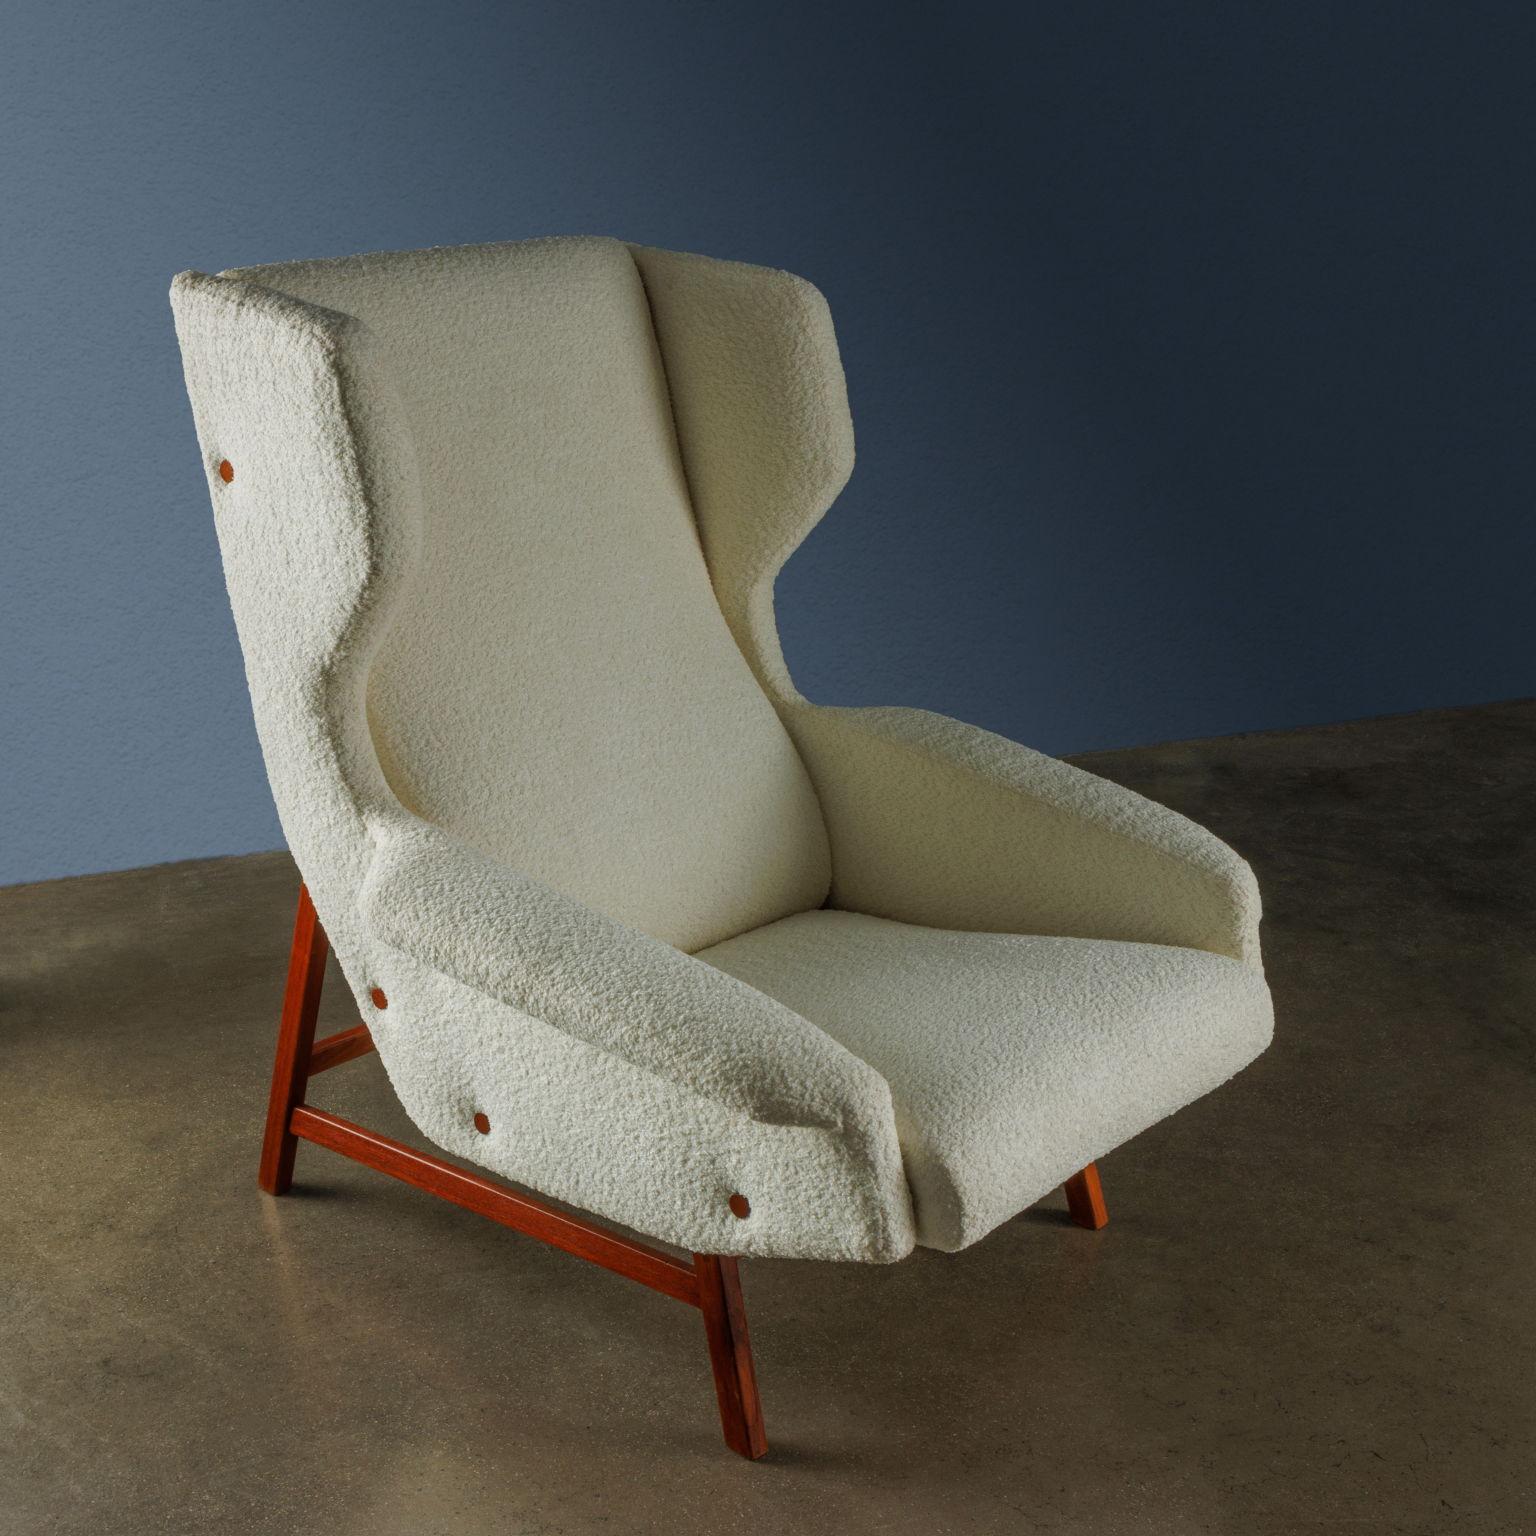 Armchair with teak structure, foam padding, velvet covering.